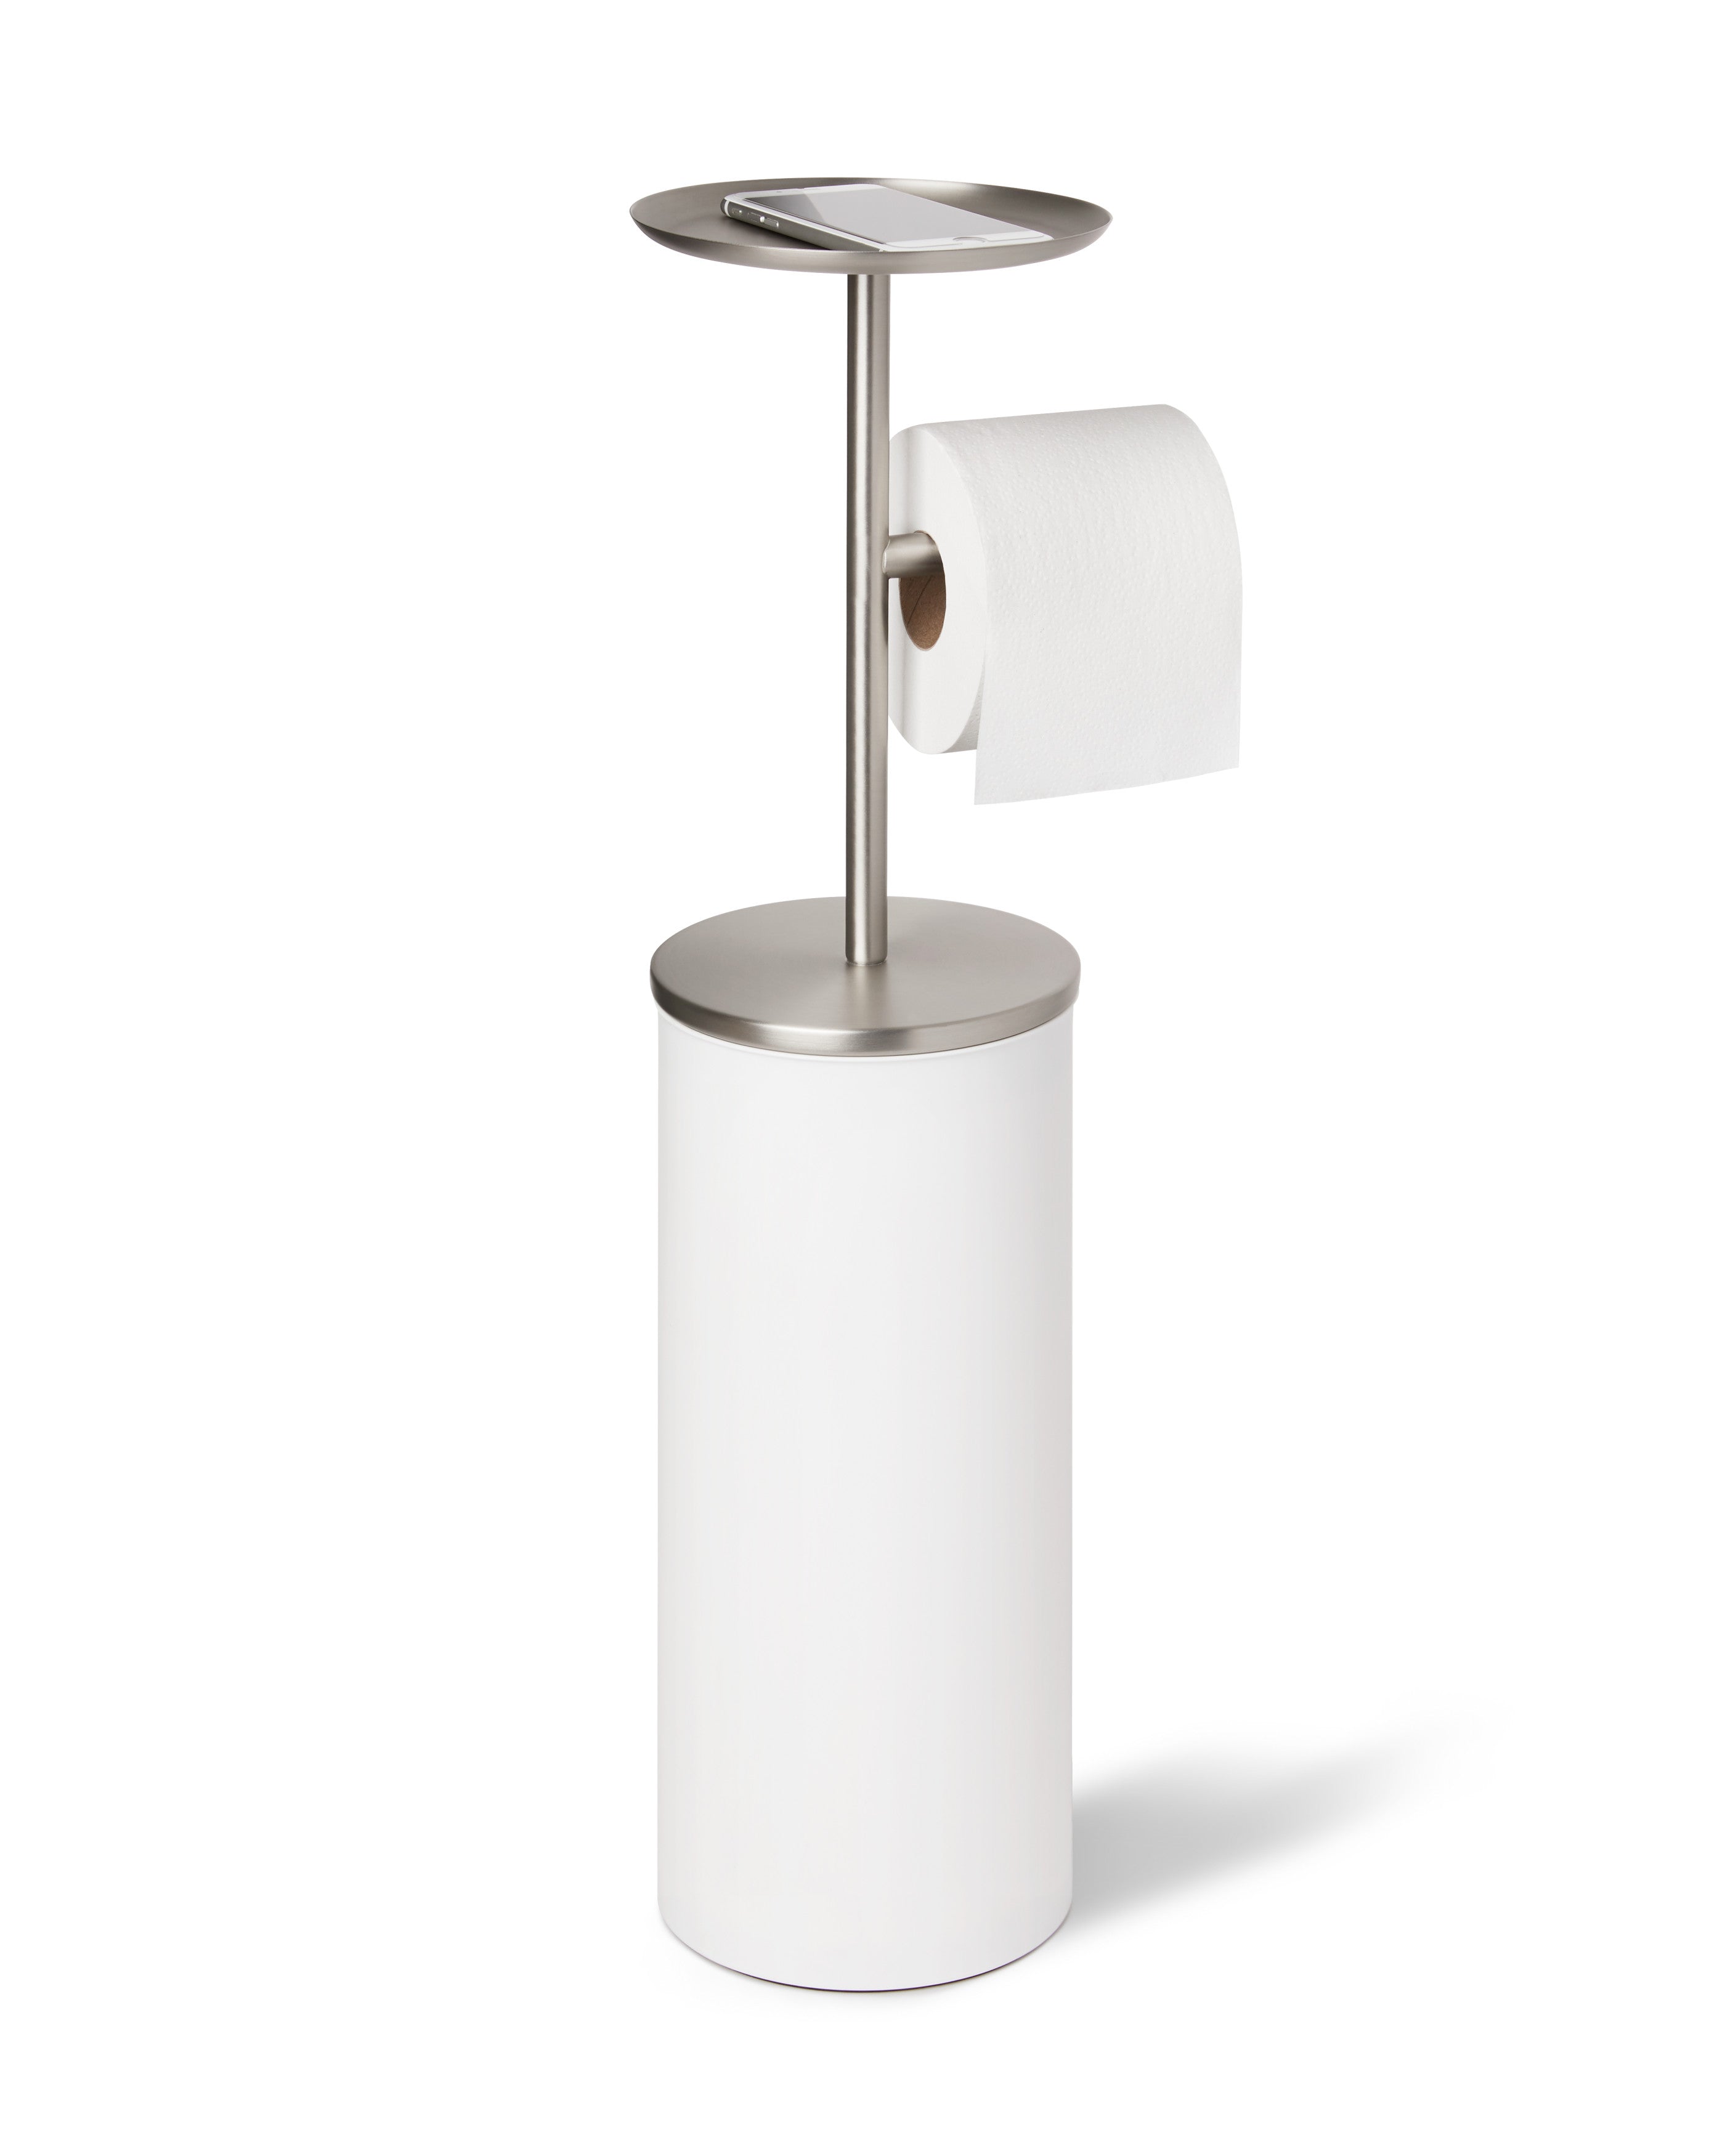 Portaloo Toilet Paper Stand - Stylish & Convenient | Umbra